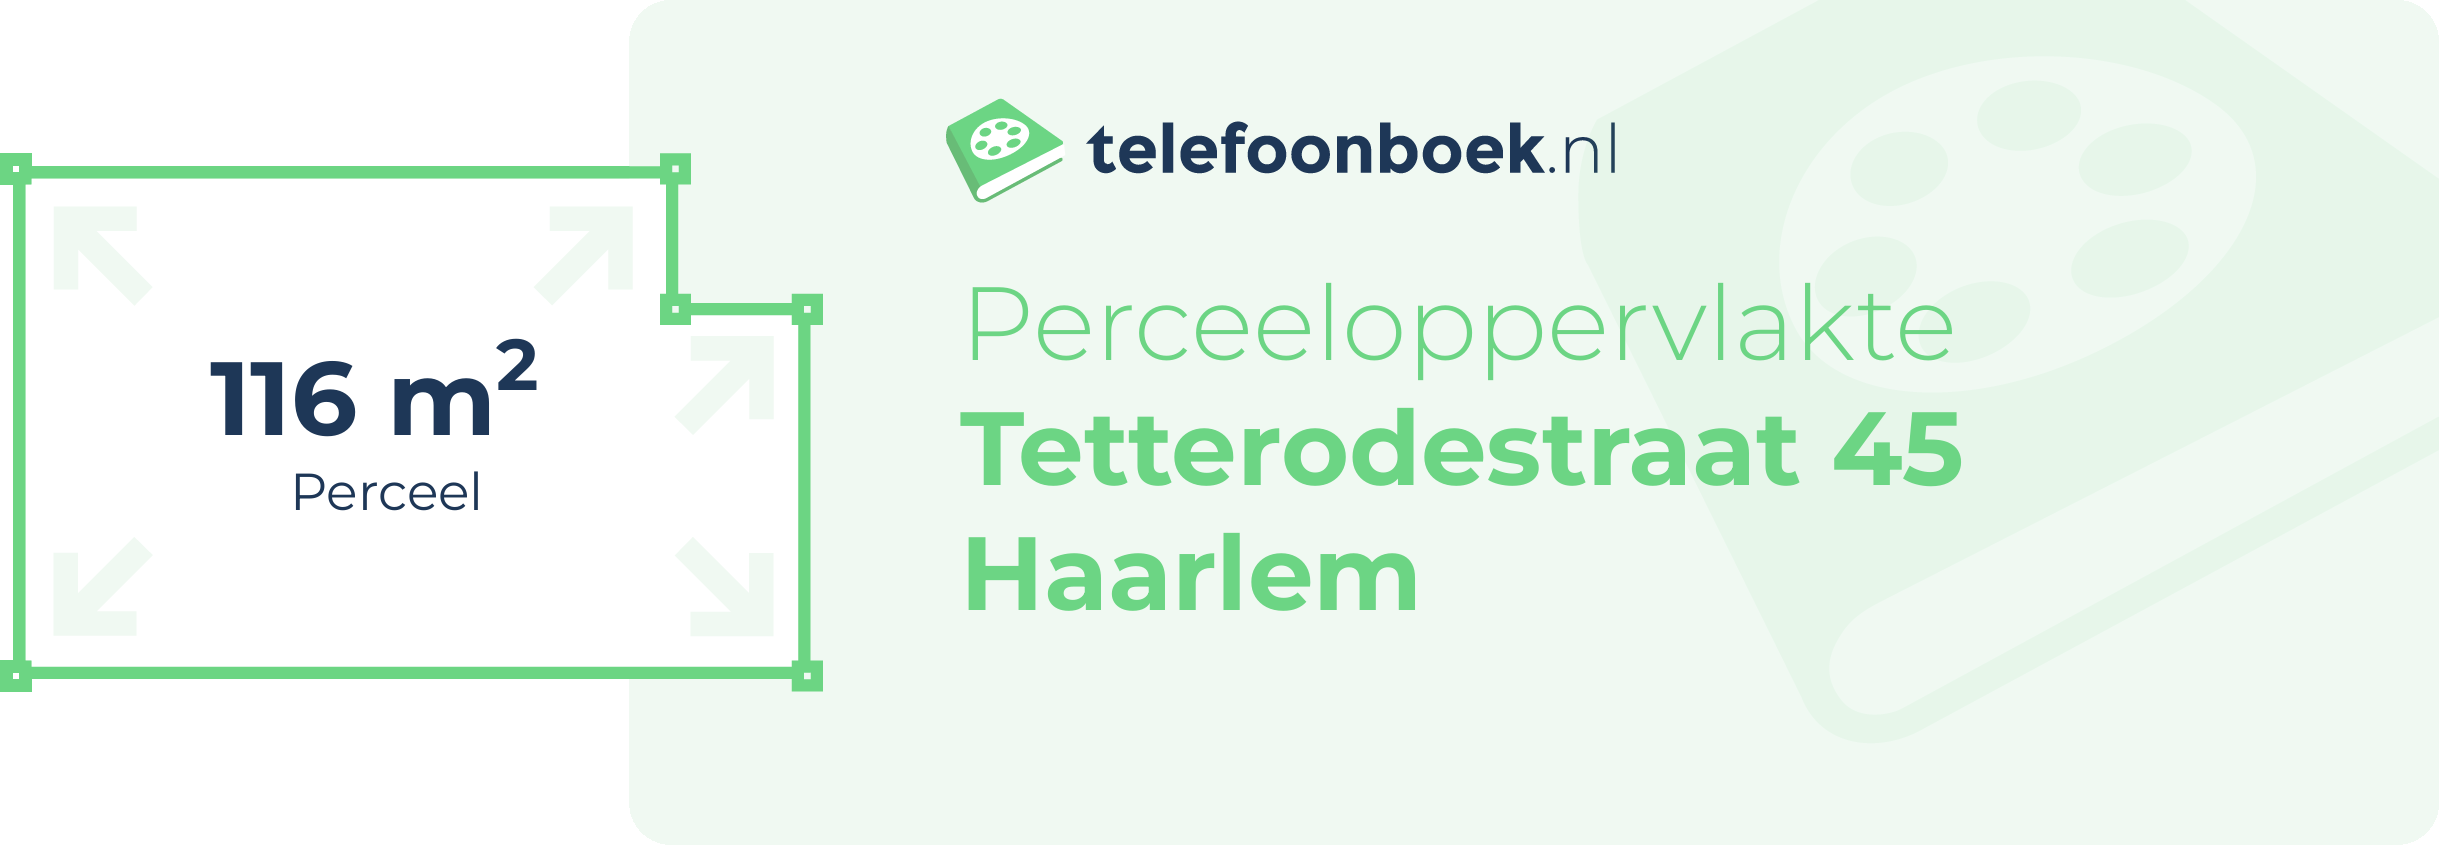 Perceeloppervlakte Tetterodestraat 45 Haarlem